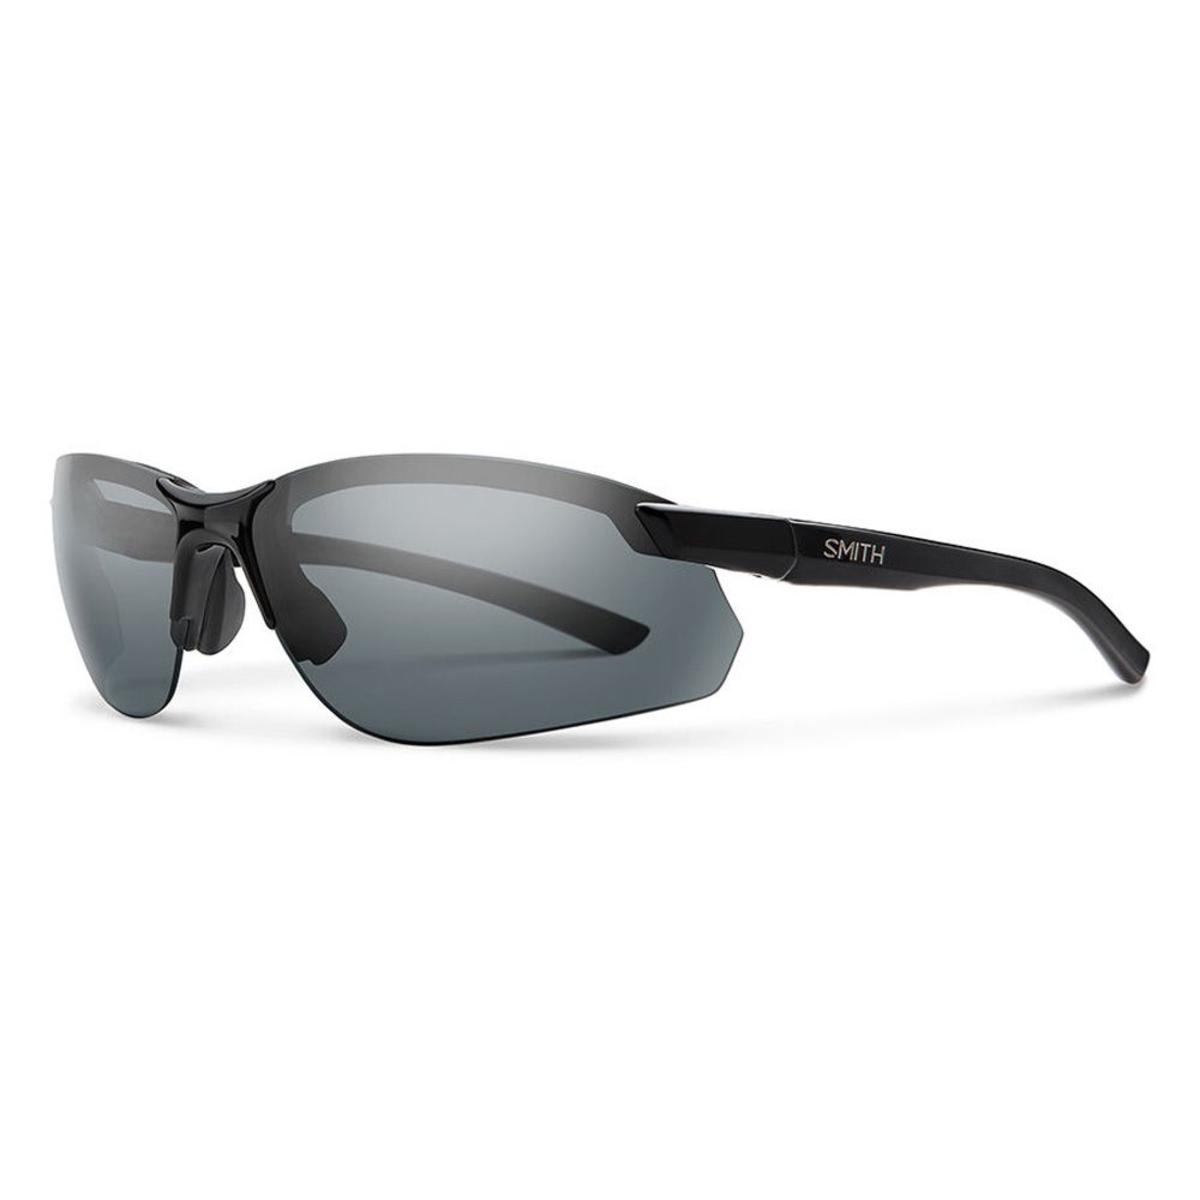 Smith Optics Parallel Max 2 Sunglasses Polarized Gray - Black Frame